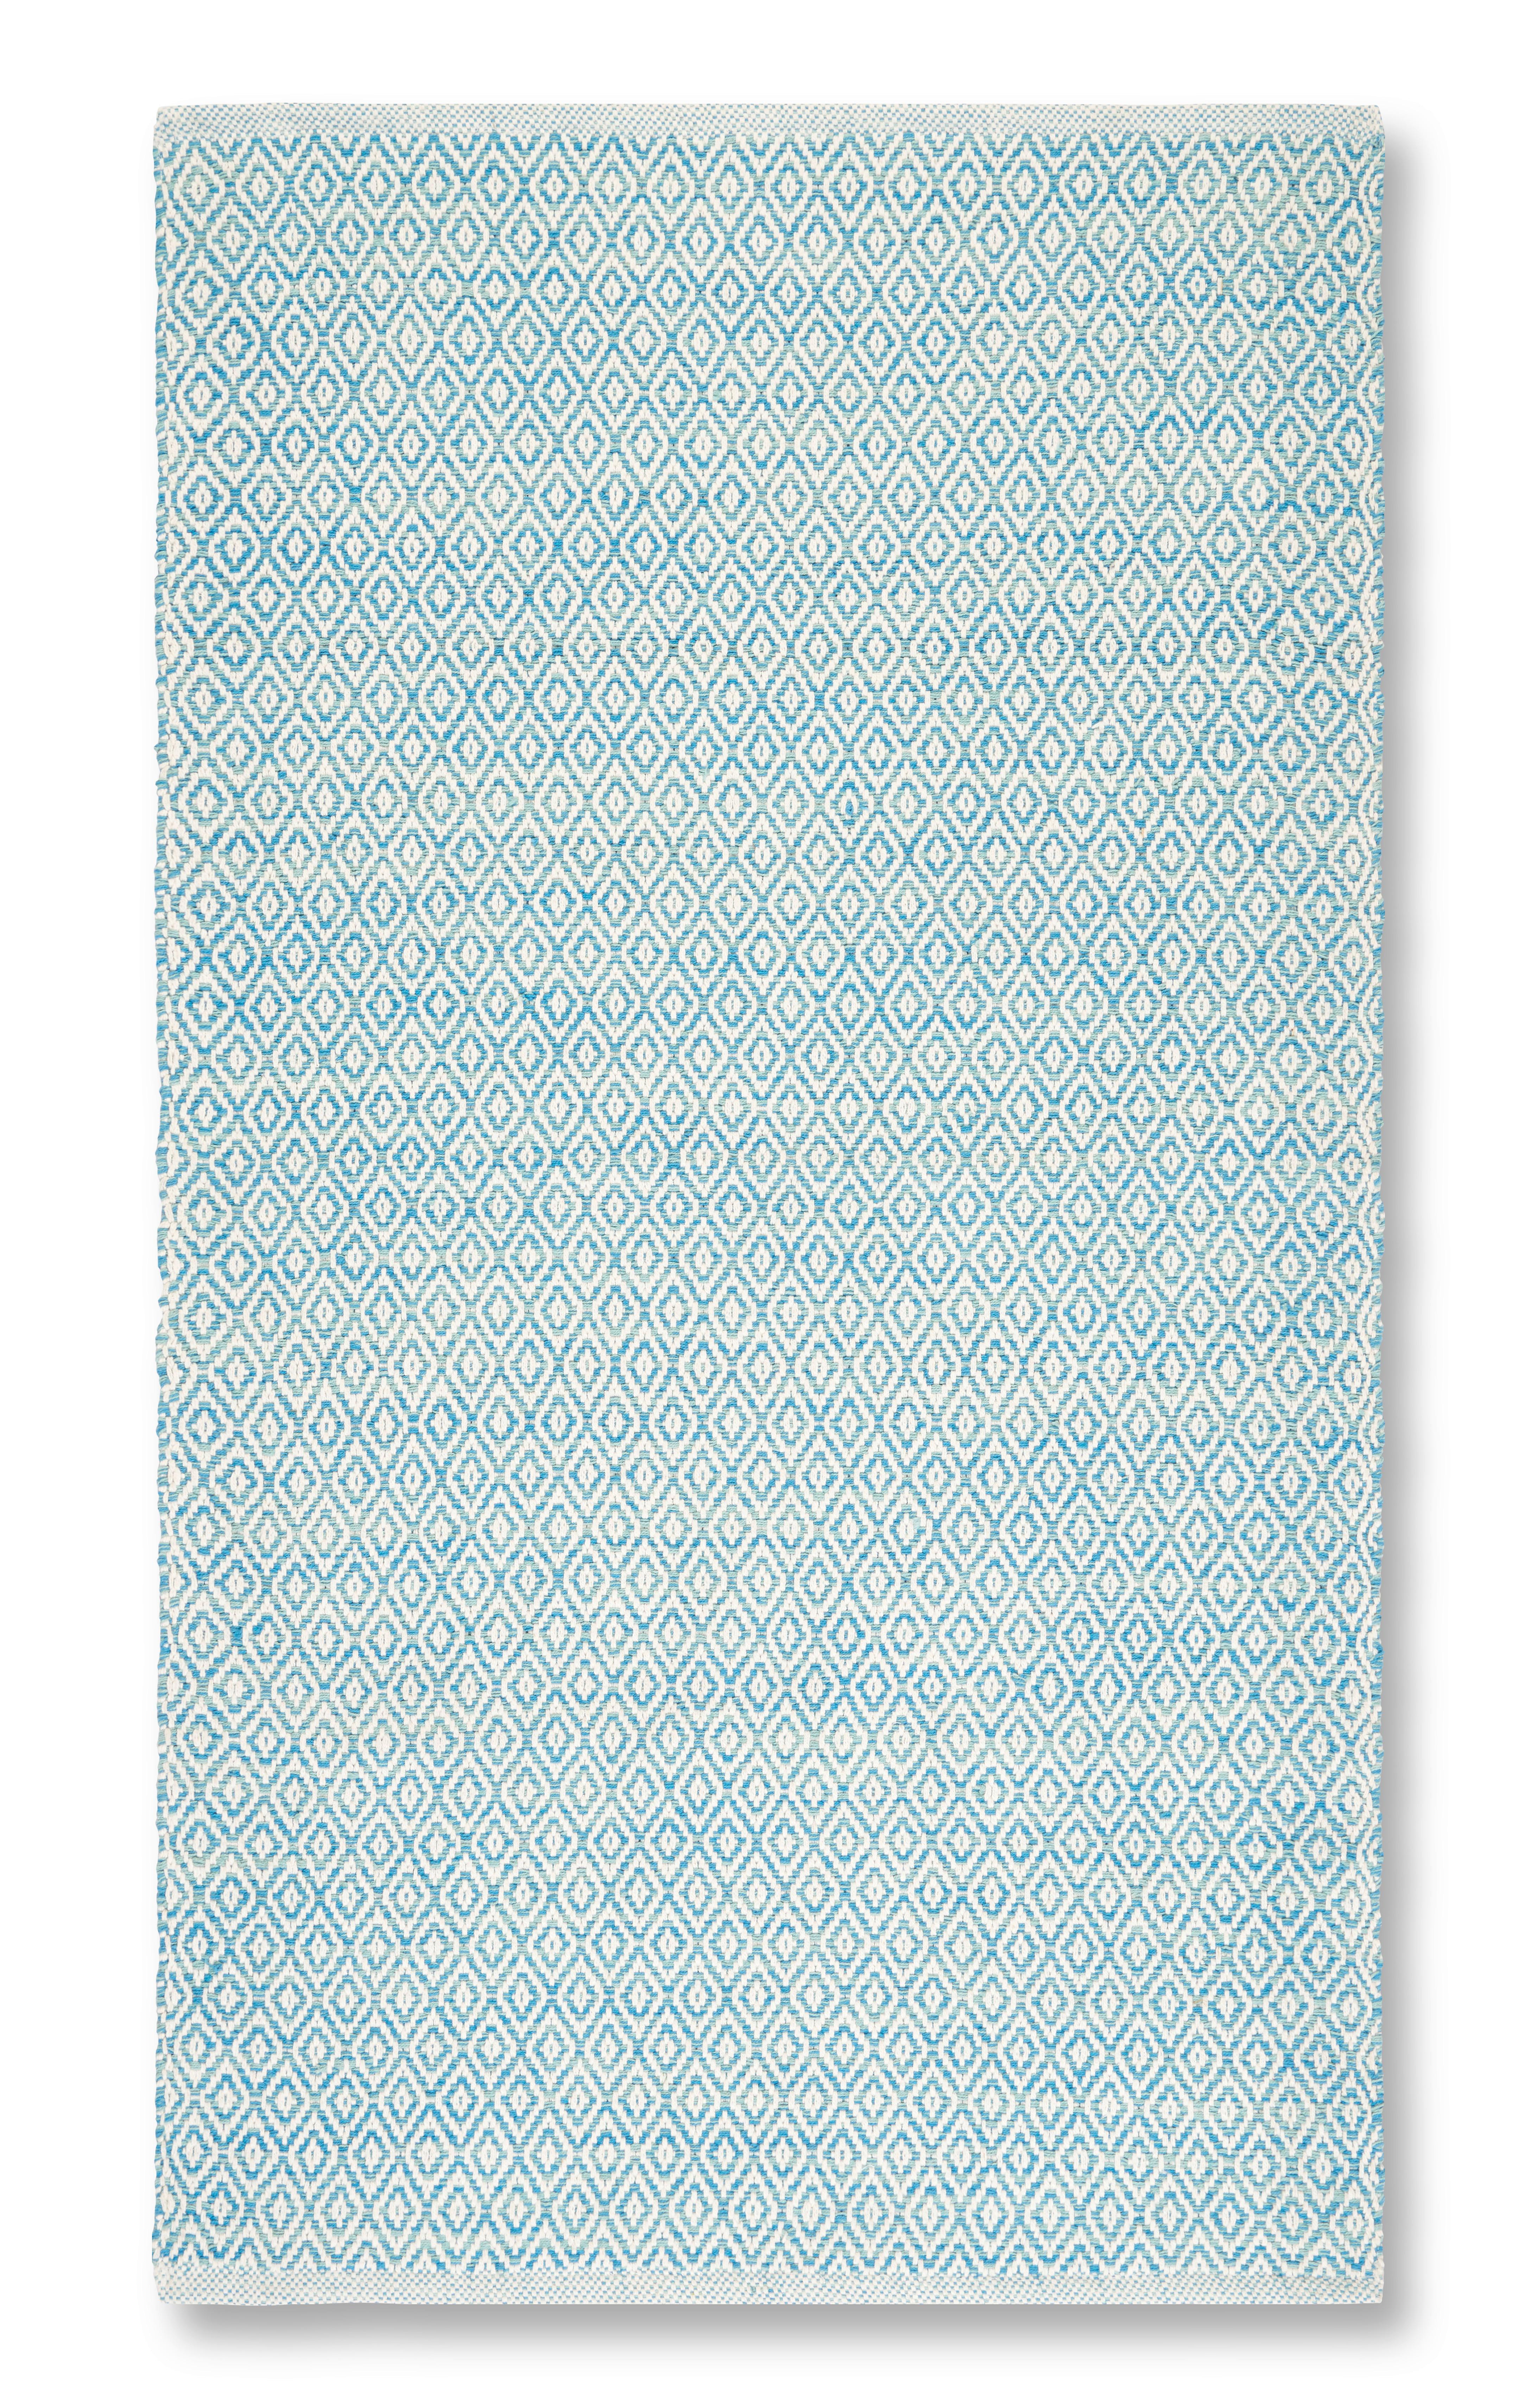 Covor țesut de mână CAROLA 2 - albastru, Basics, textil (80/150cm) - Modern Living